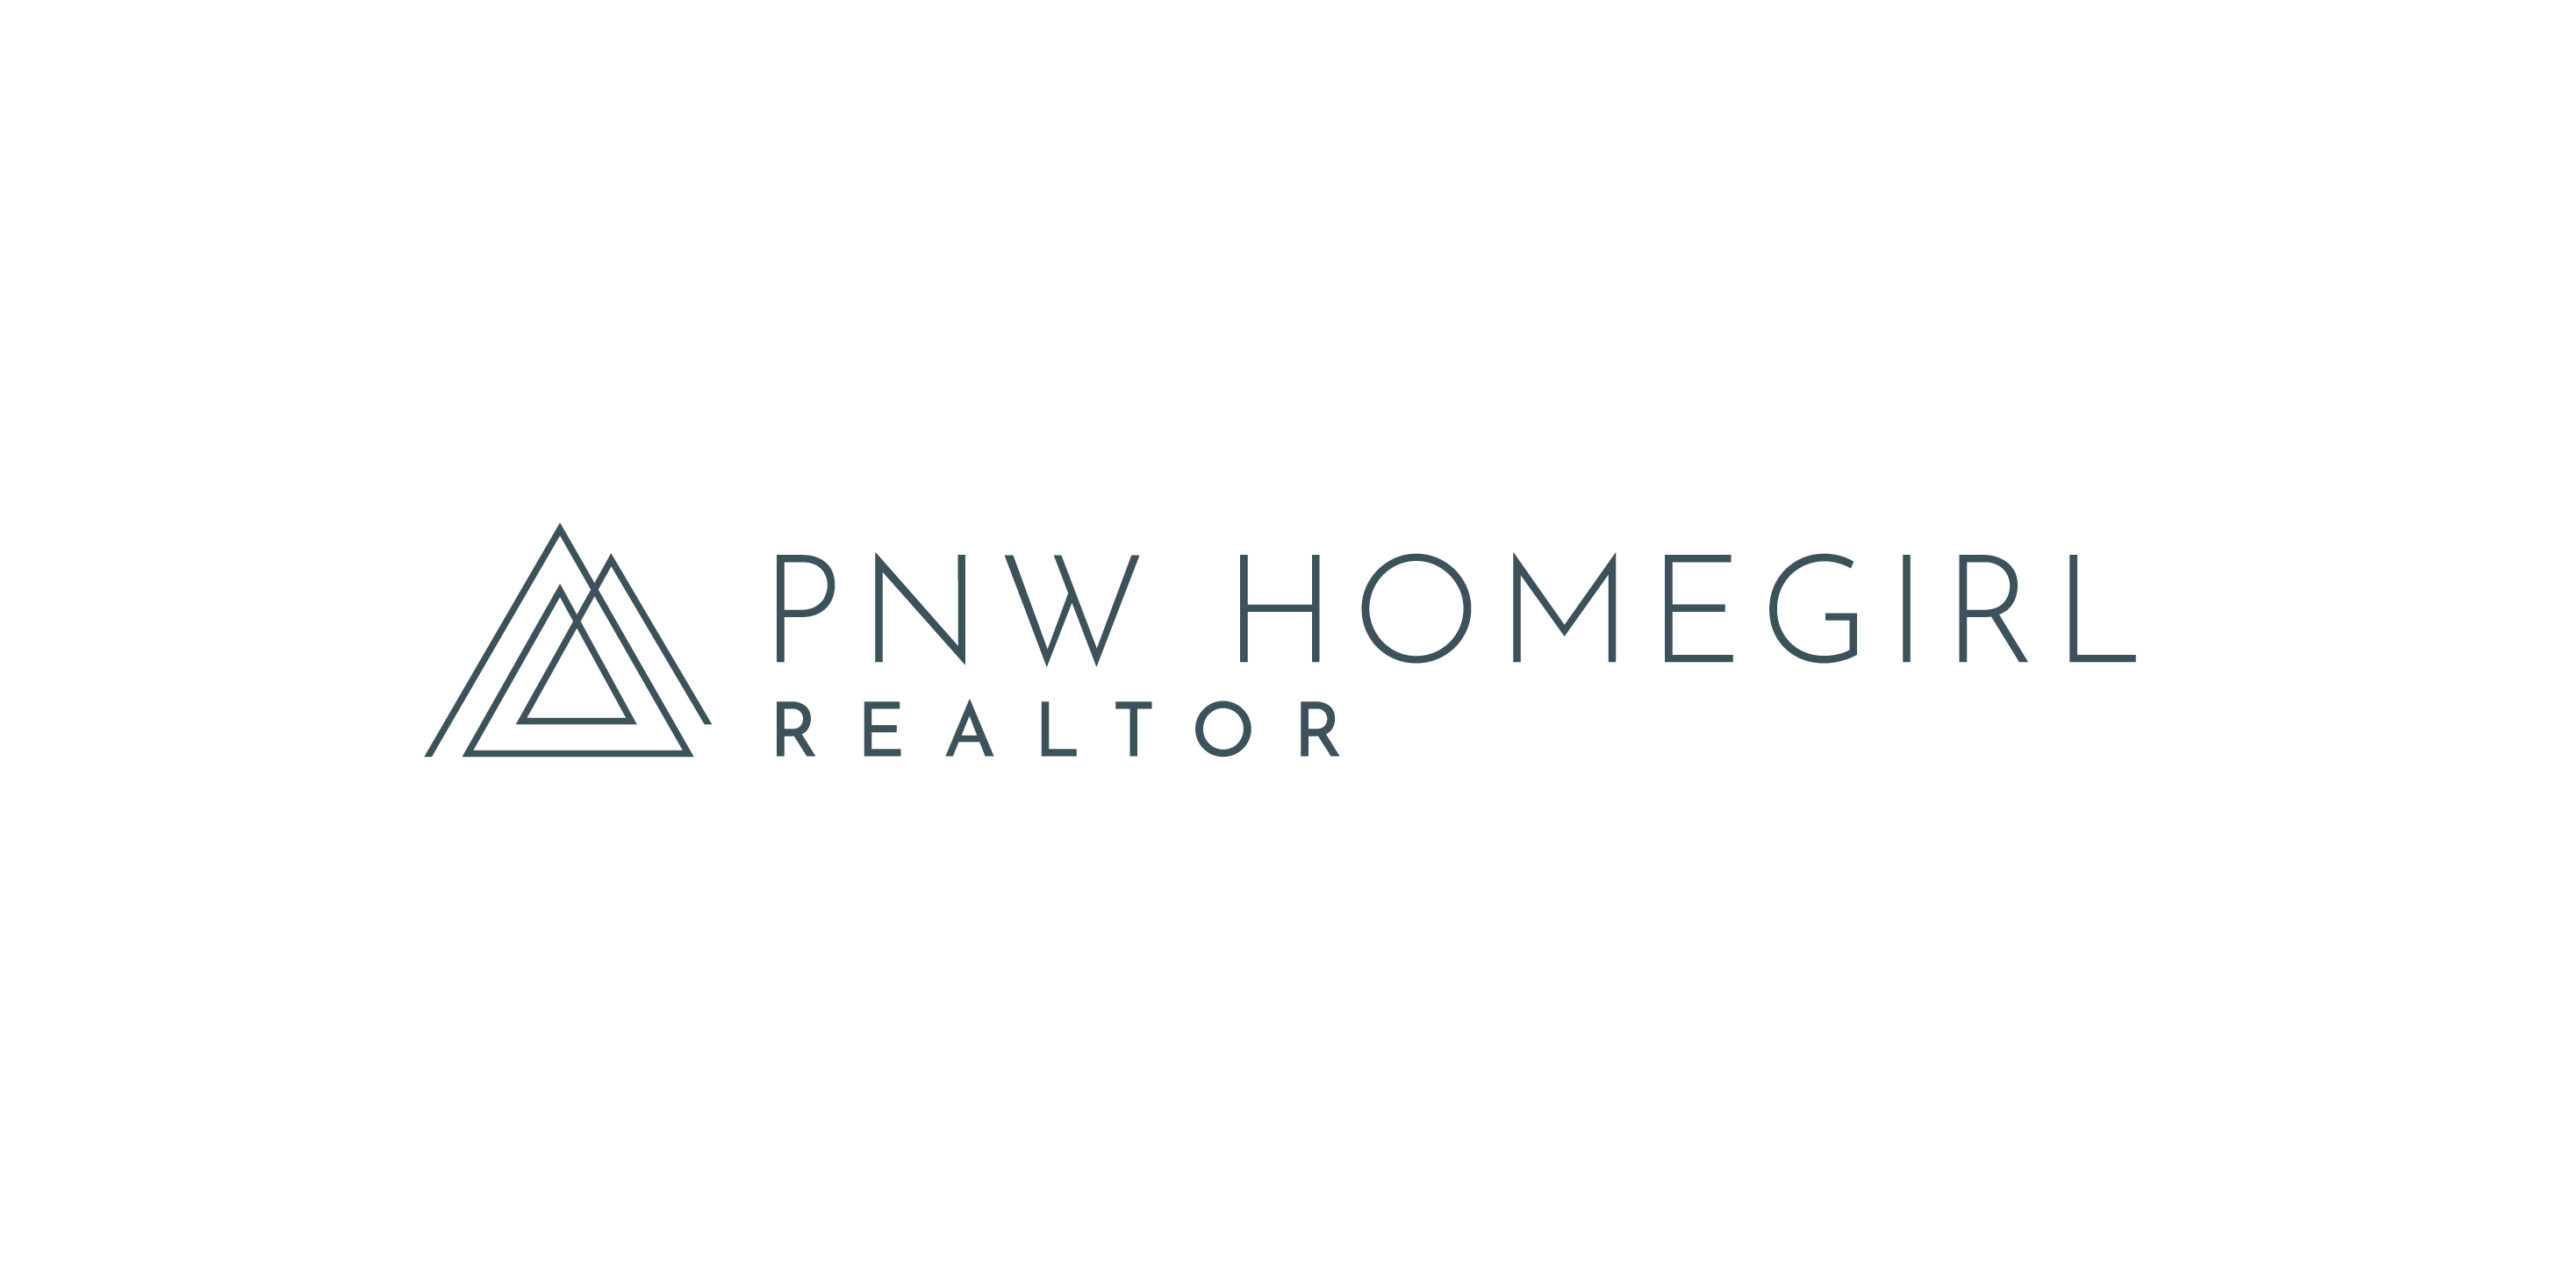 PNW HomeGirl Realtor logo design